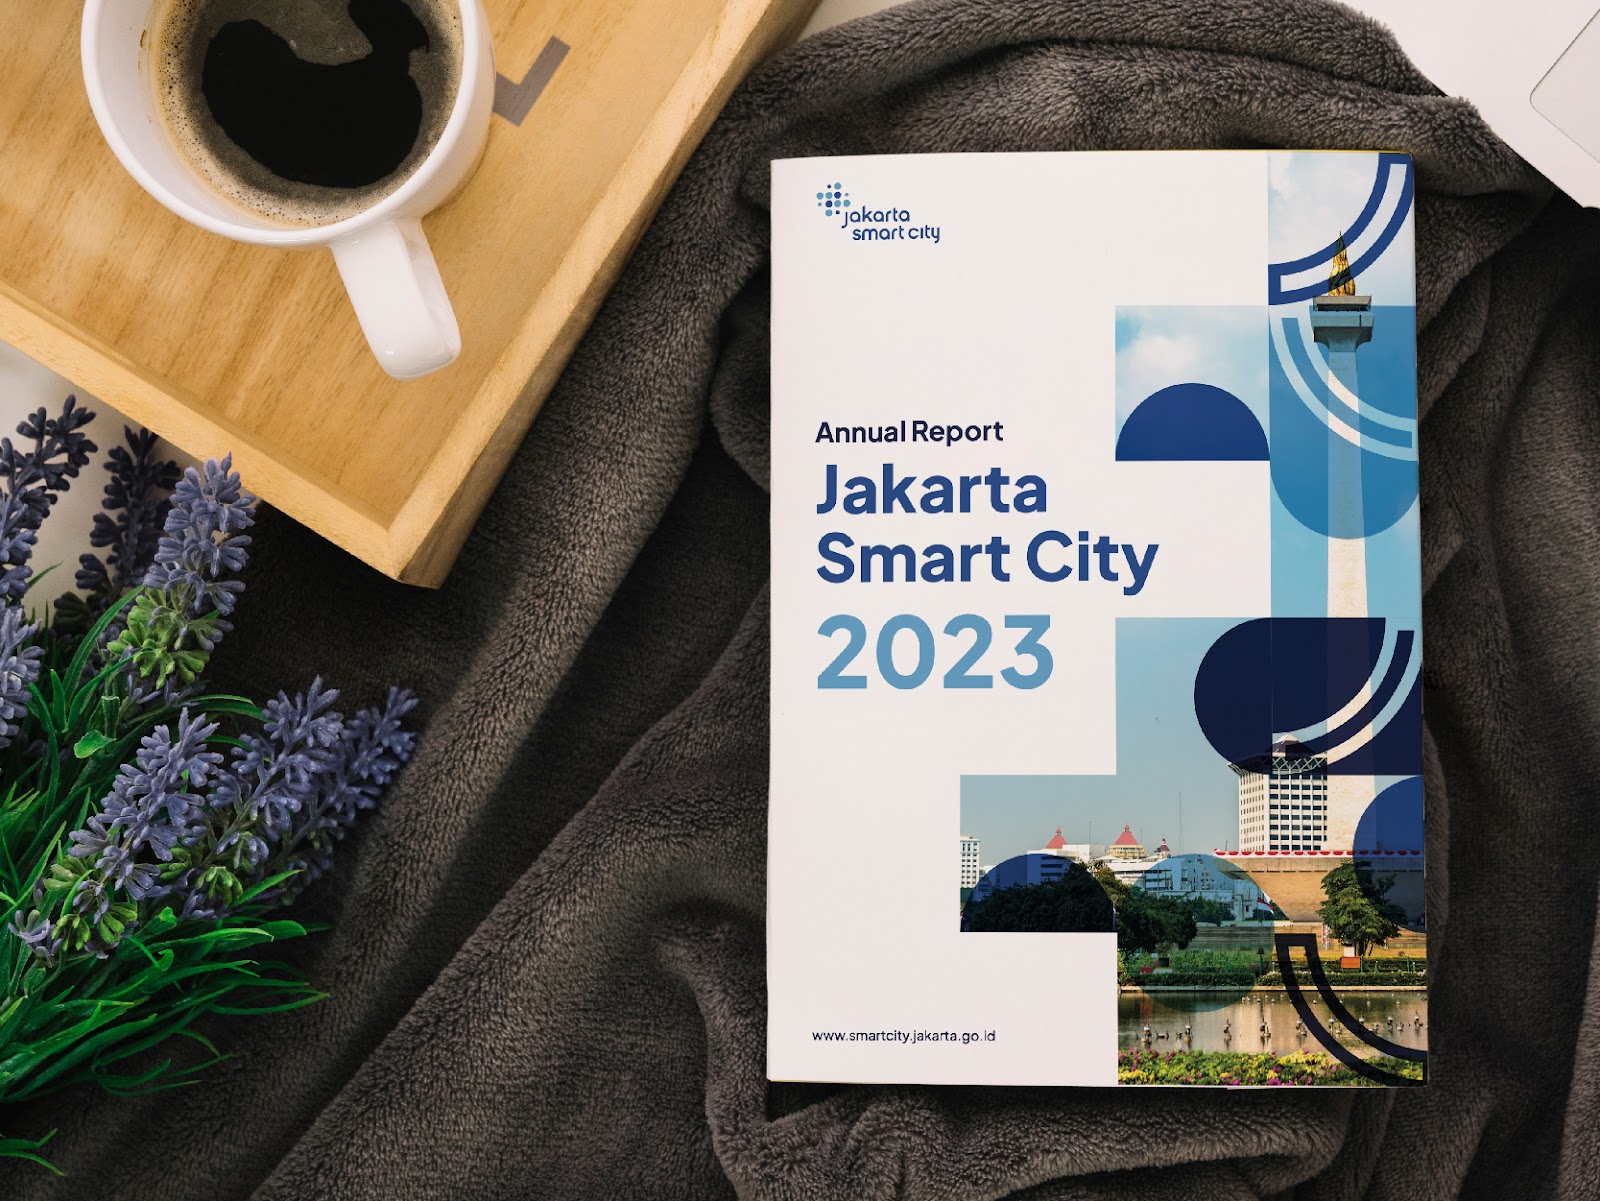  Annual Report Jakarta Smart City 2023. Sumber: Jakarta Smart City